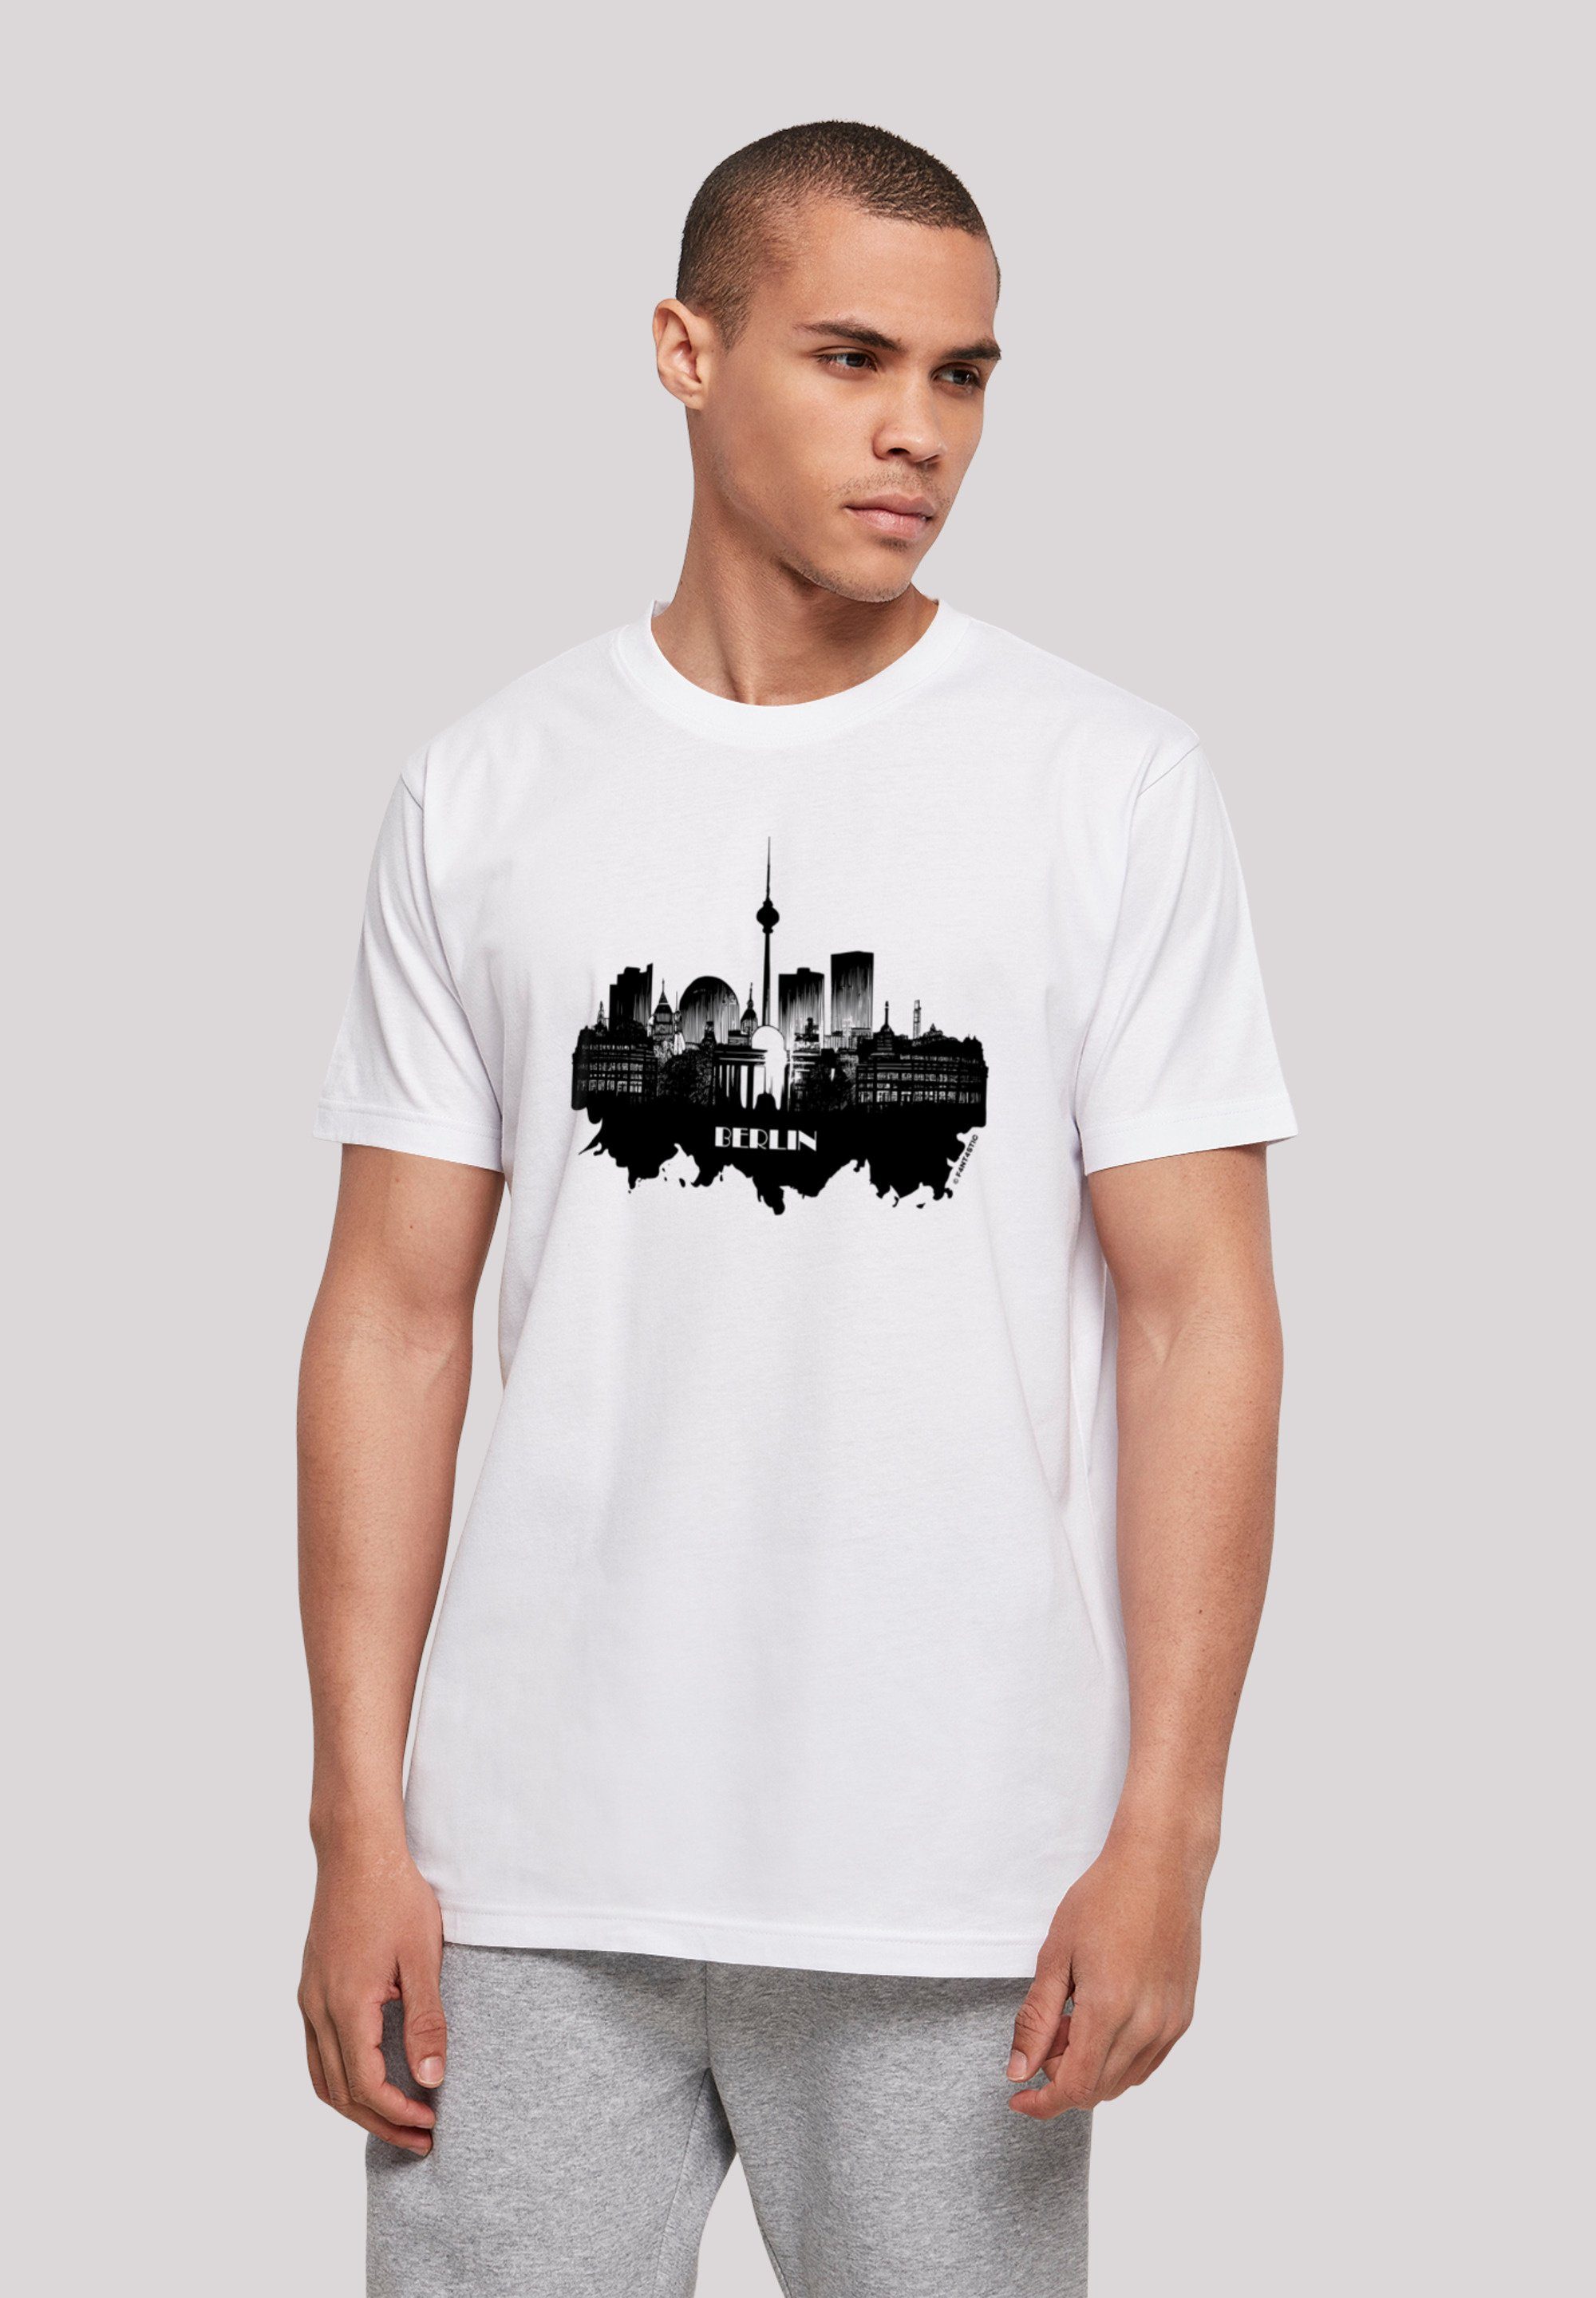 F4NT4STIC T-Shirt Cities Collection - Berlin skyline Print, Rippbündchen am  Hals und Doppelnähte am Saum